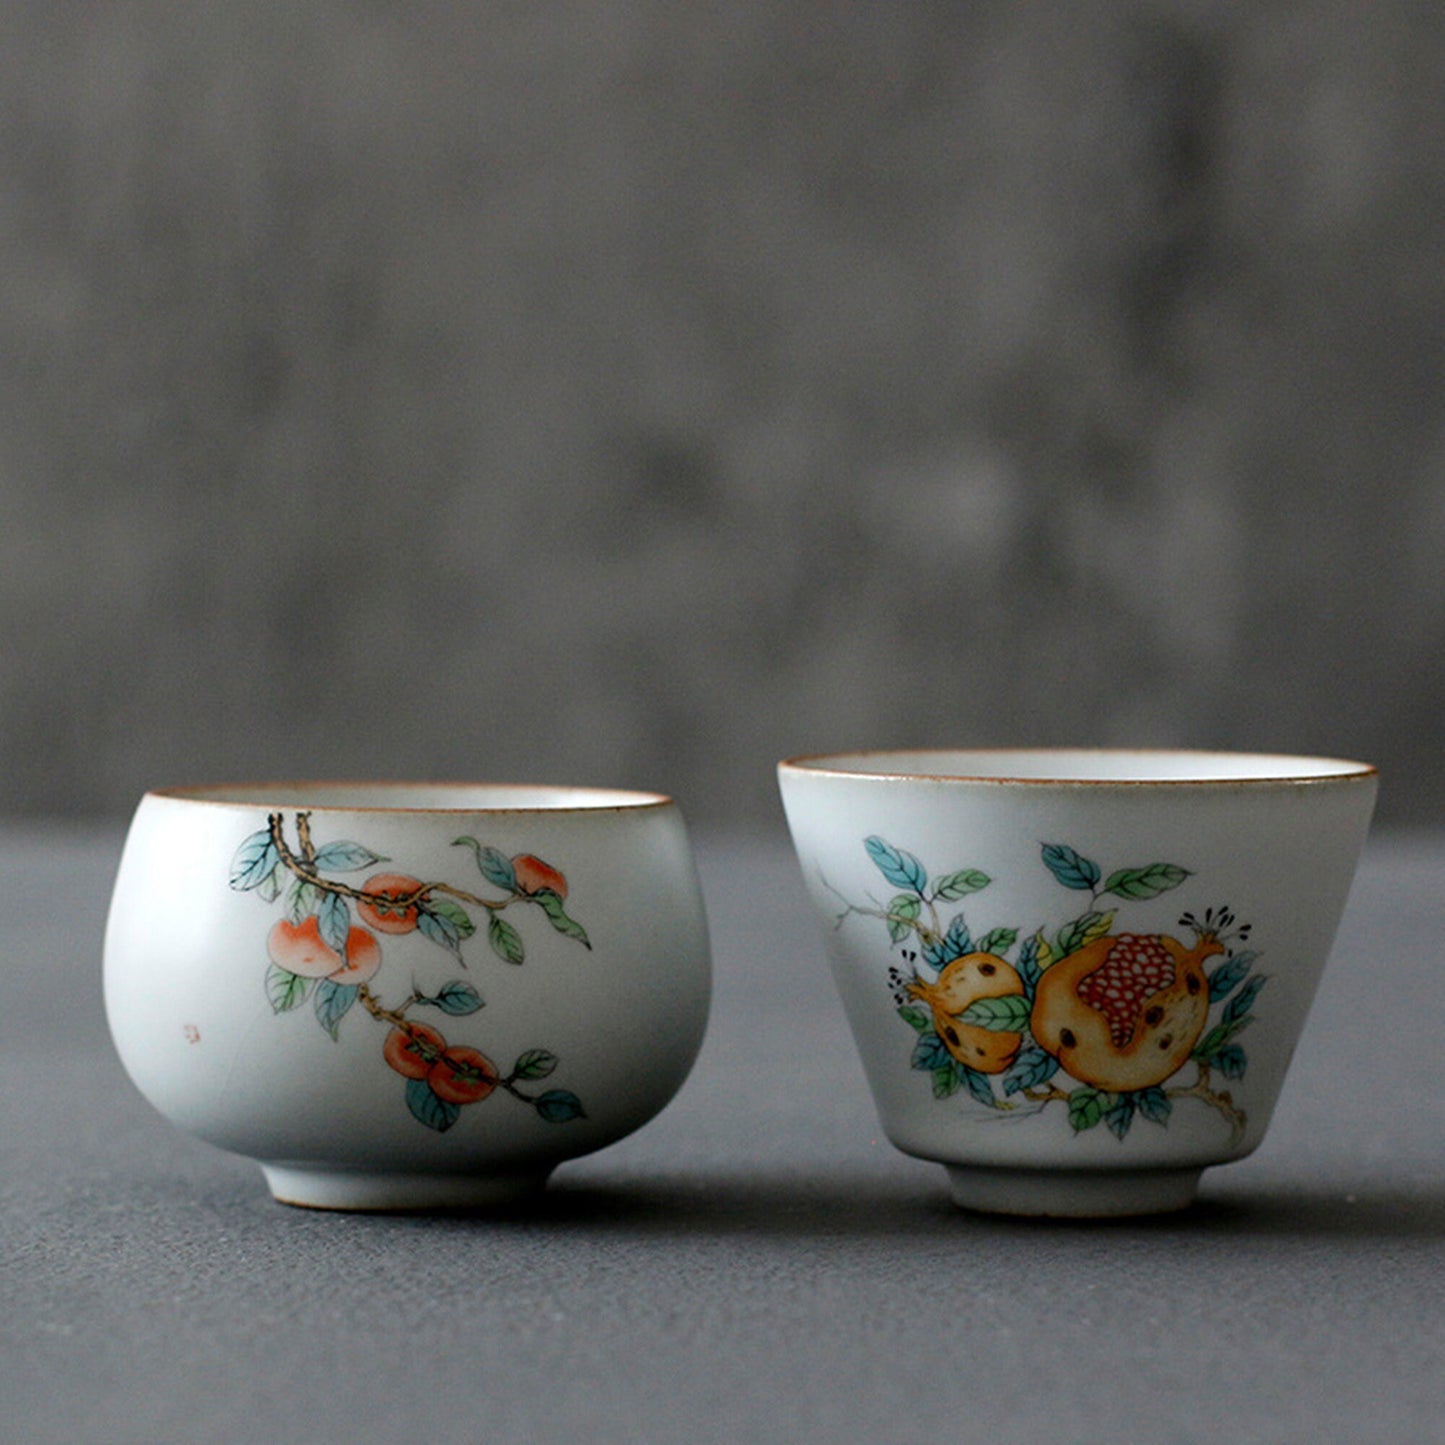 Ceramic Teacup Sets of 5  Kung Fu Tea Cup 120ML/100ML-Tea Cups and Sets Chinese Tea Set Gongfu Teaware